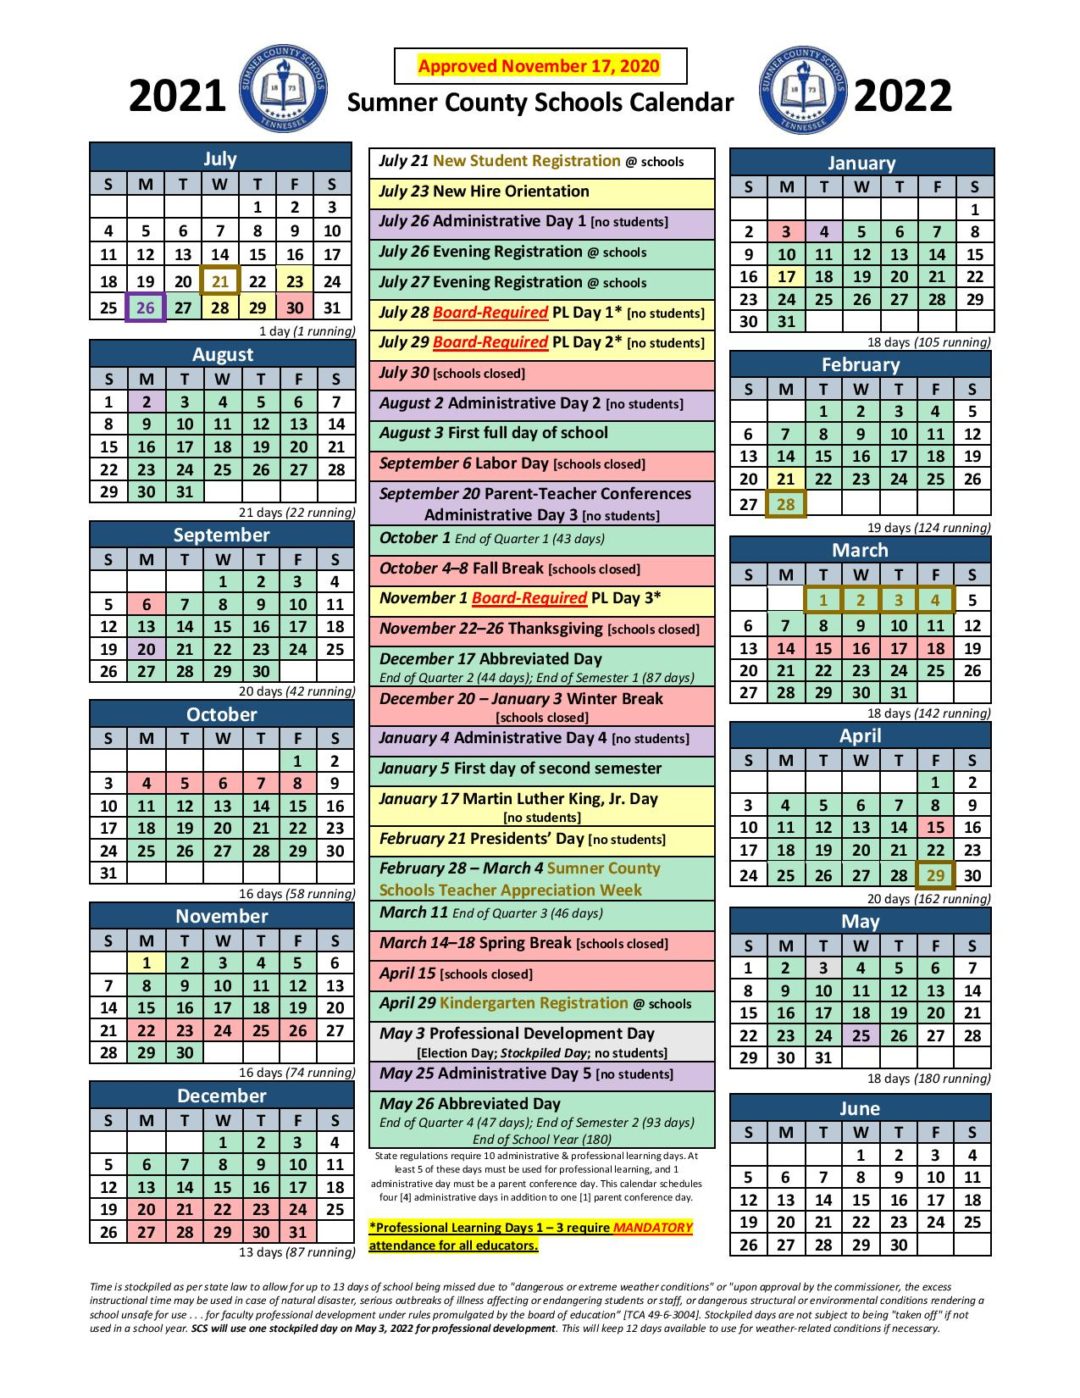 Sumner County School Calendar Holidays 2021 2022 Free Hot Nude Porn